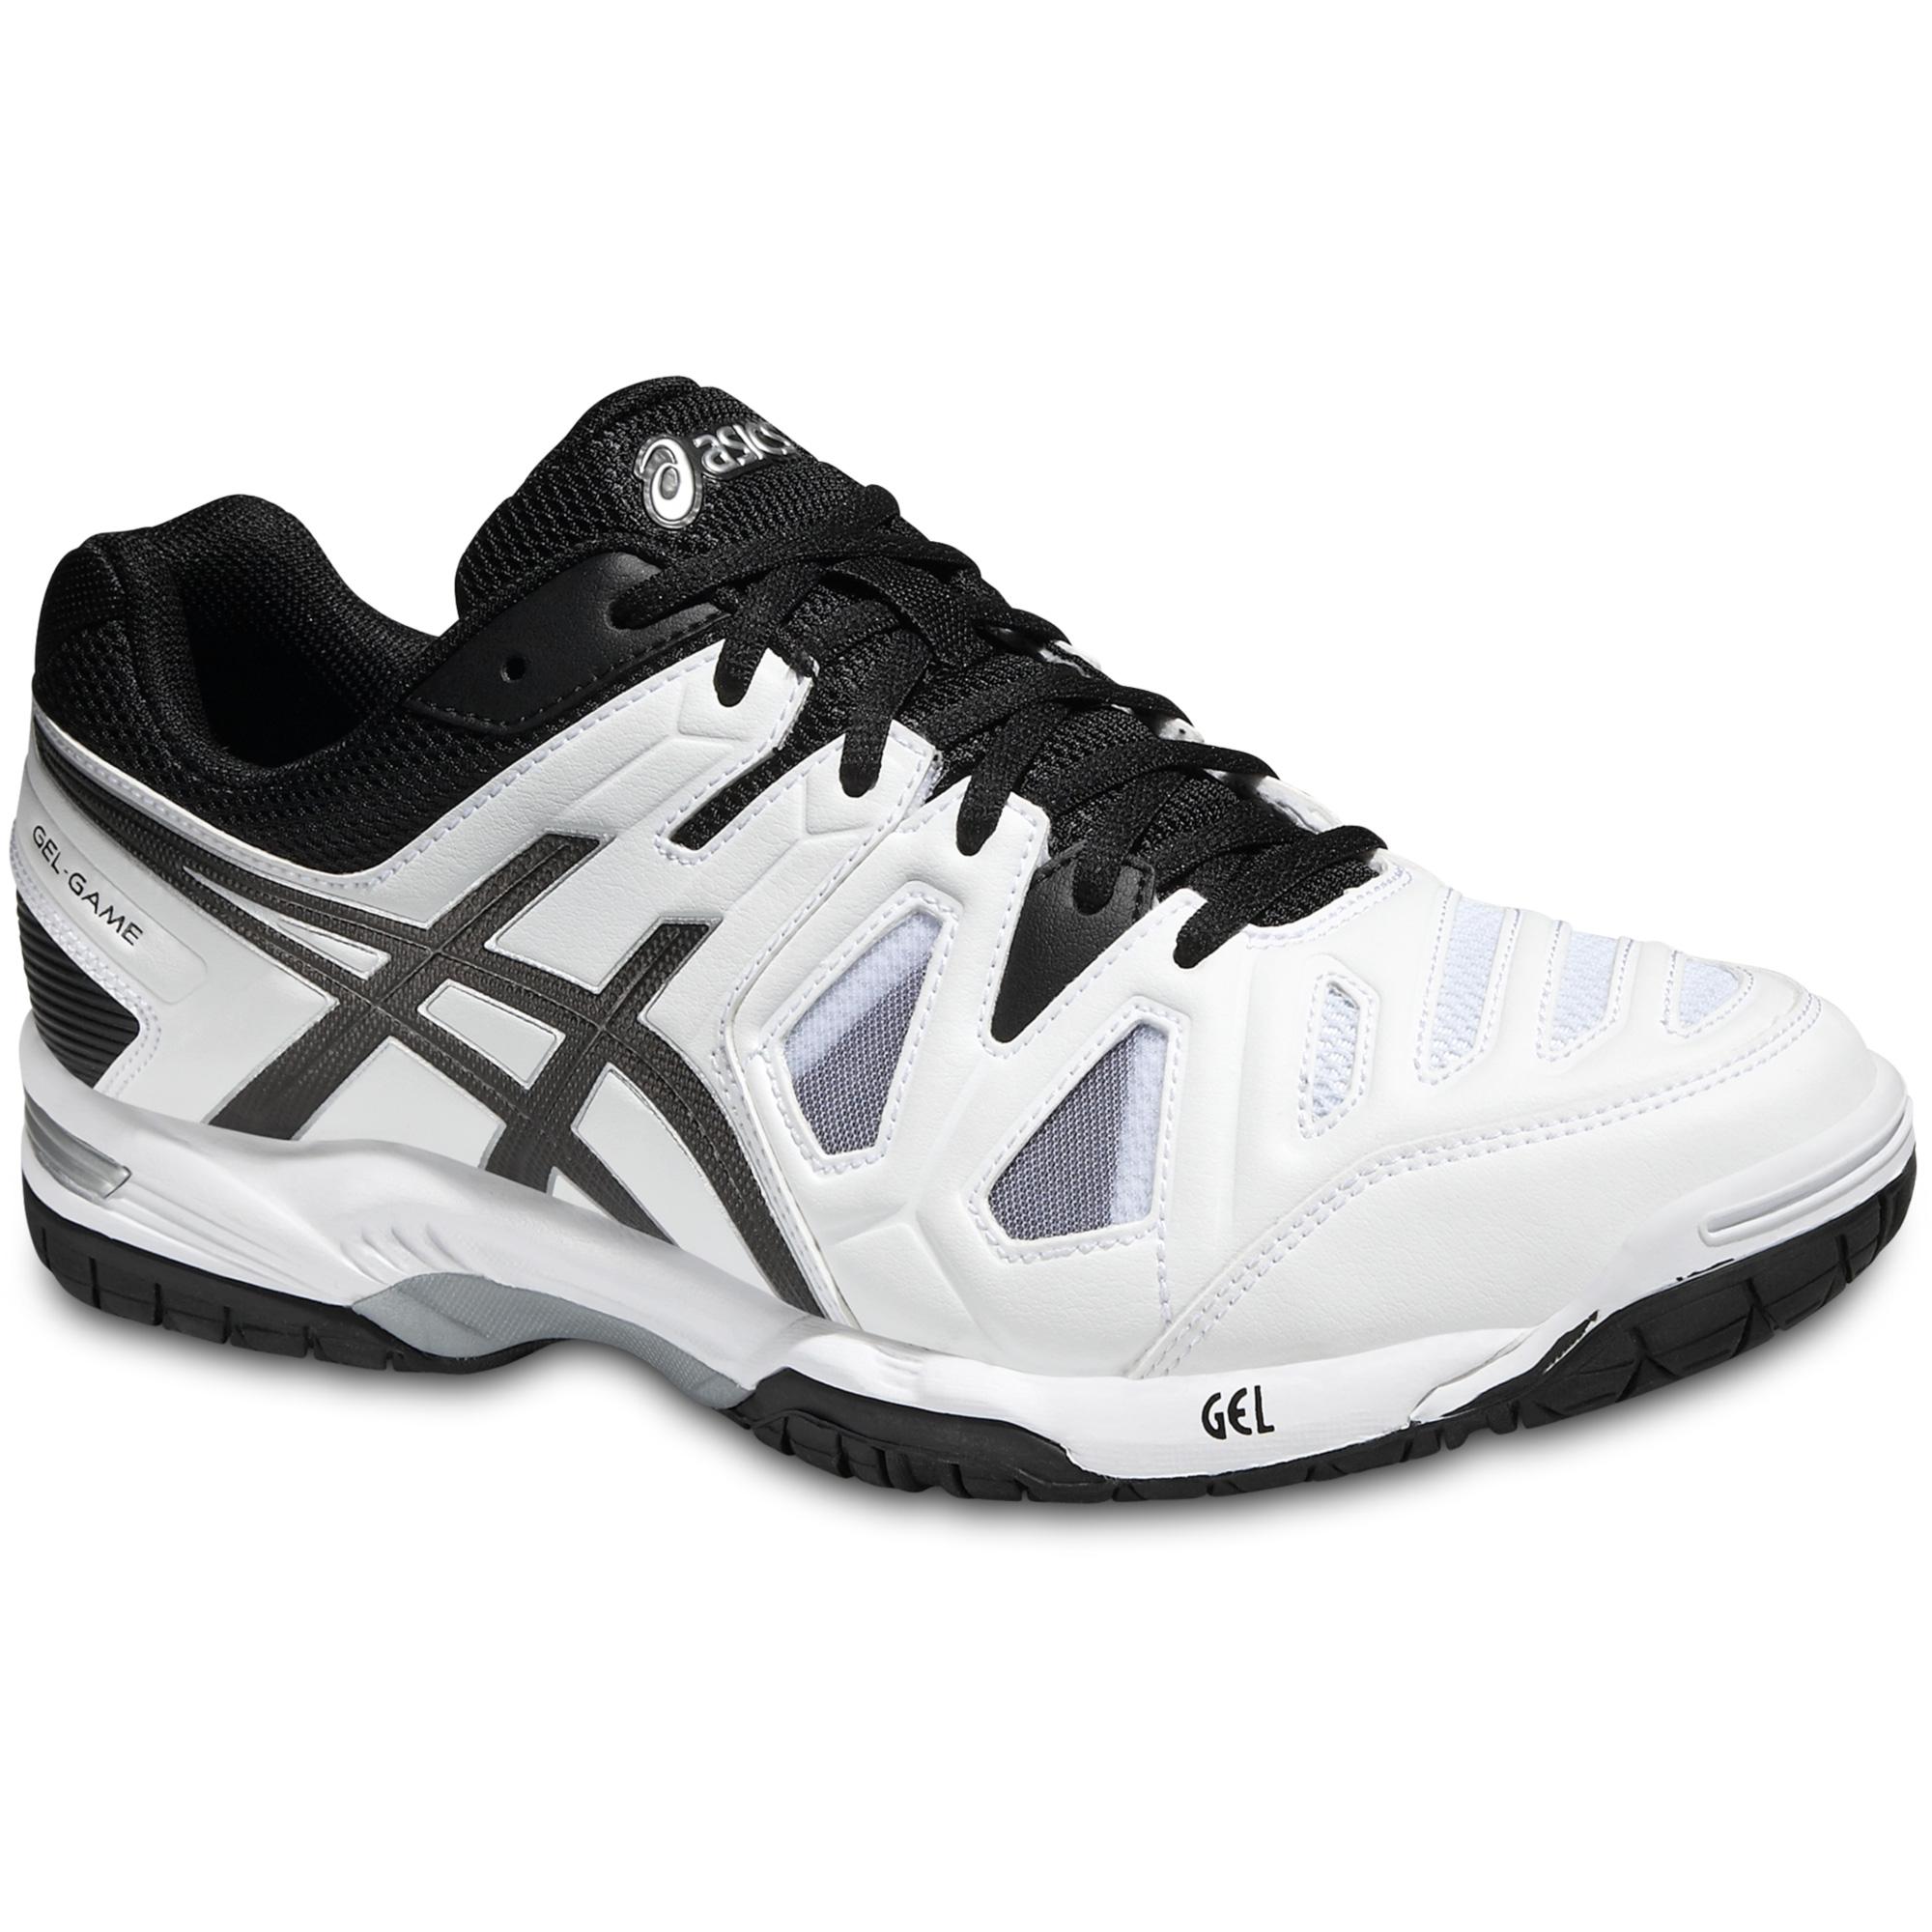 Asics GEL-Game 5 Tennis Shoes - White/Black/Silver - Tennisnuts.com